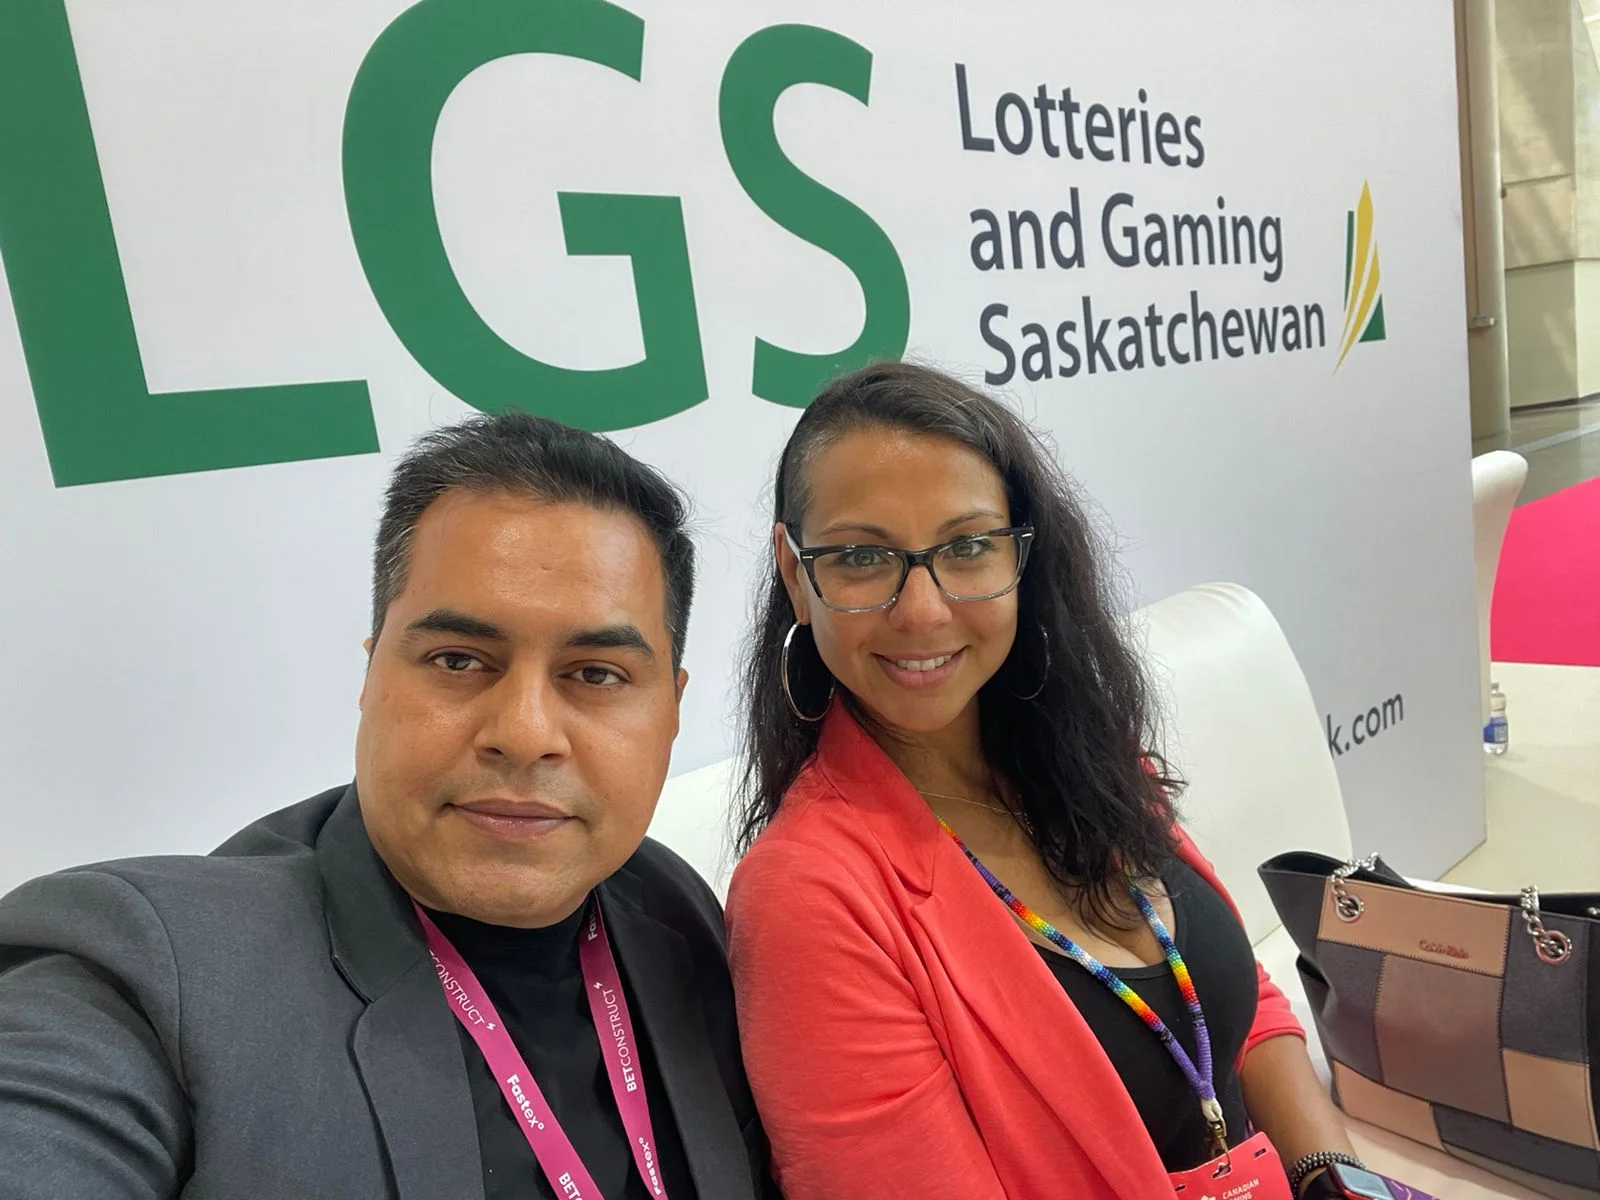 Canadian Gaming Summit 2024